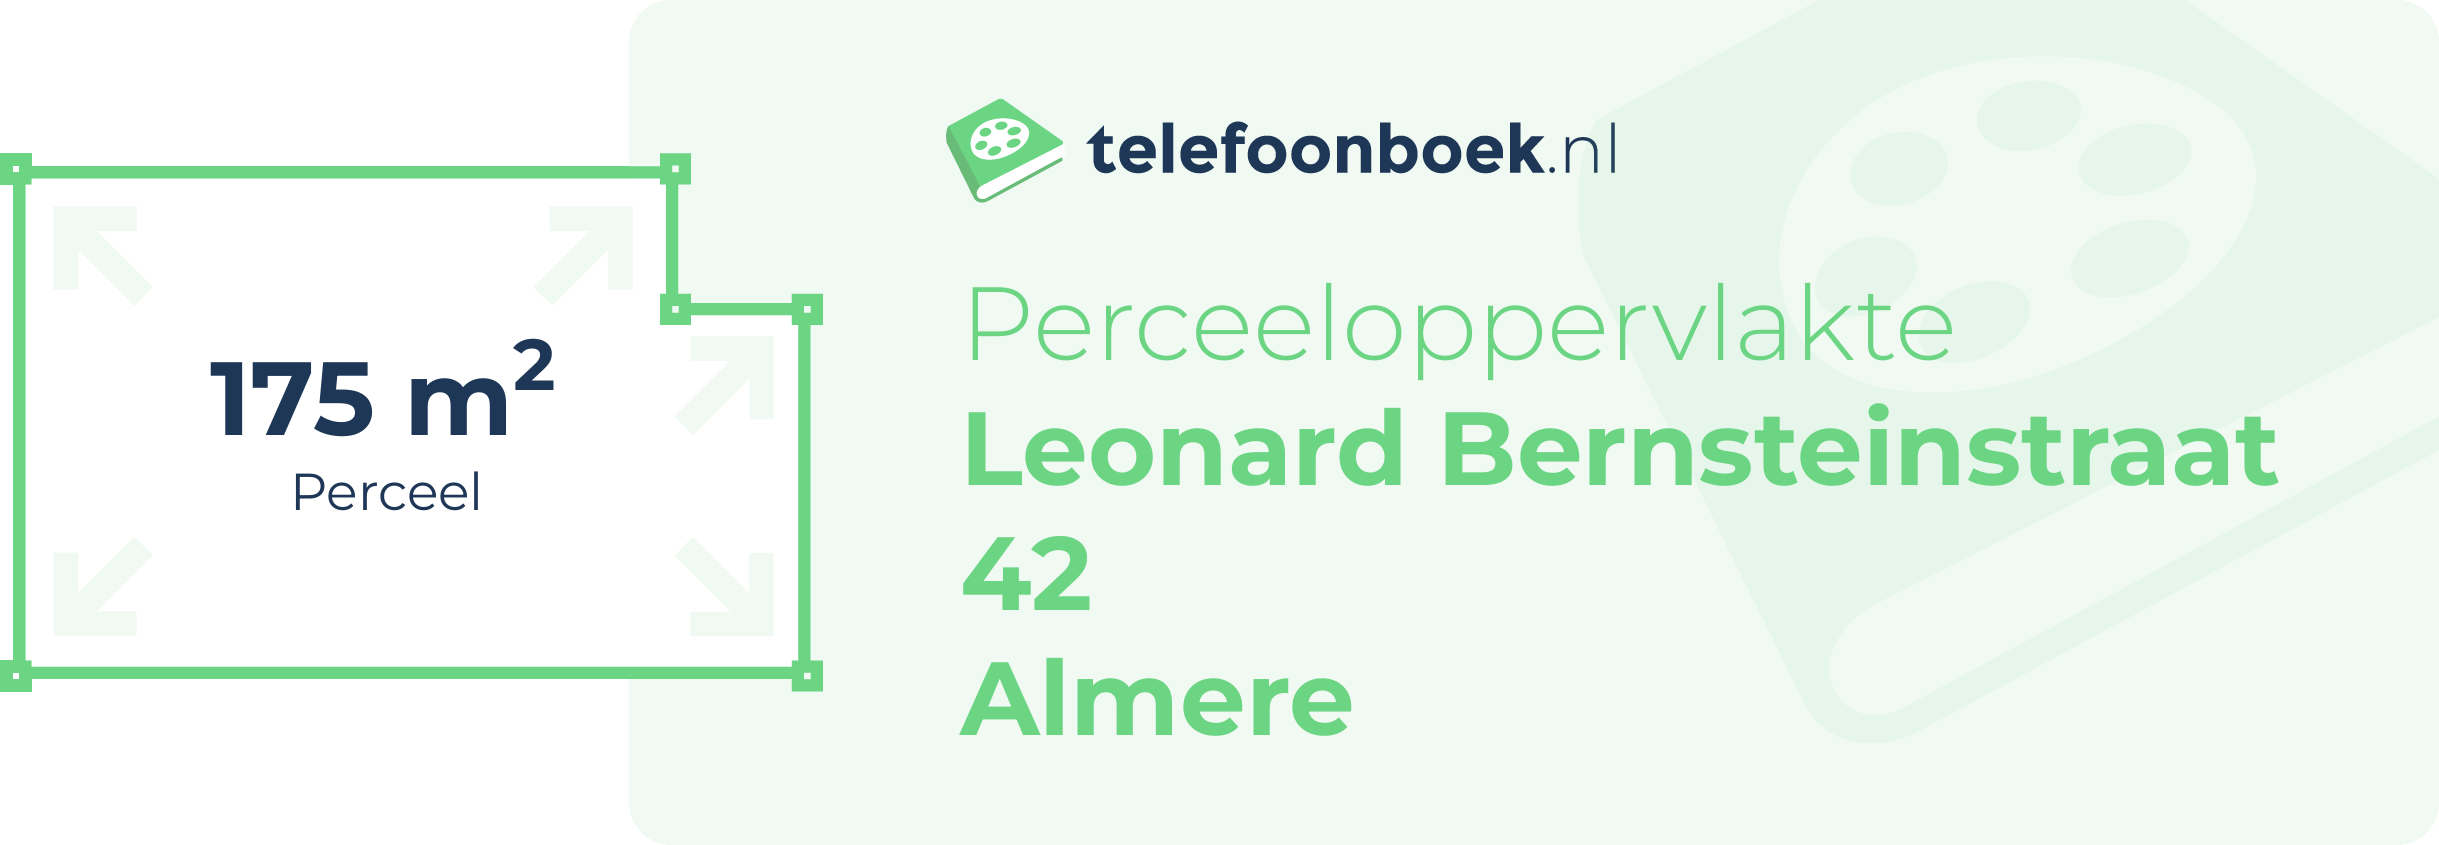 Perceeloppervlakte Leonard Bernsteinstraat 42 Almere